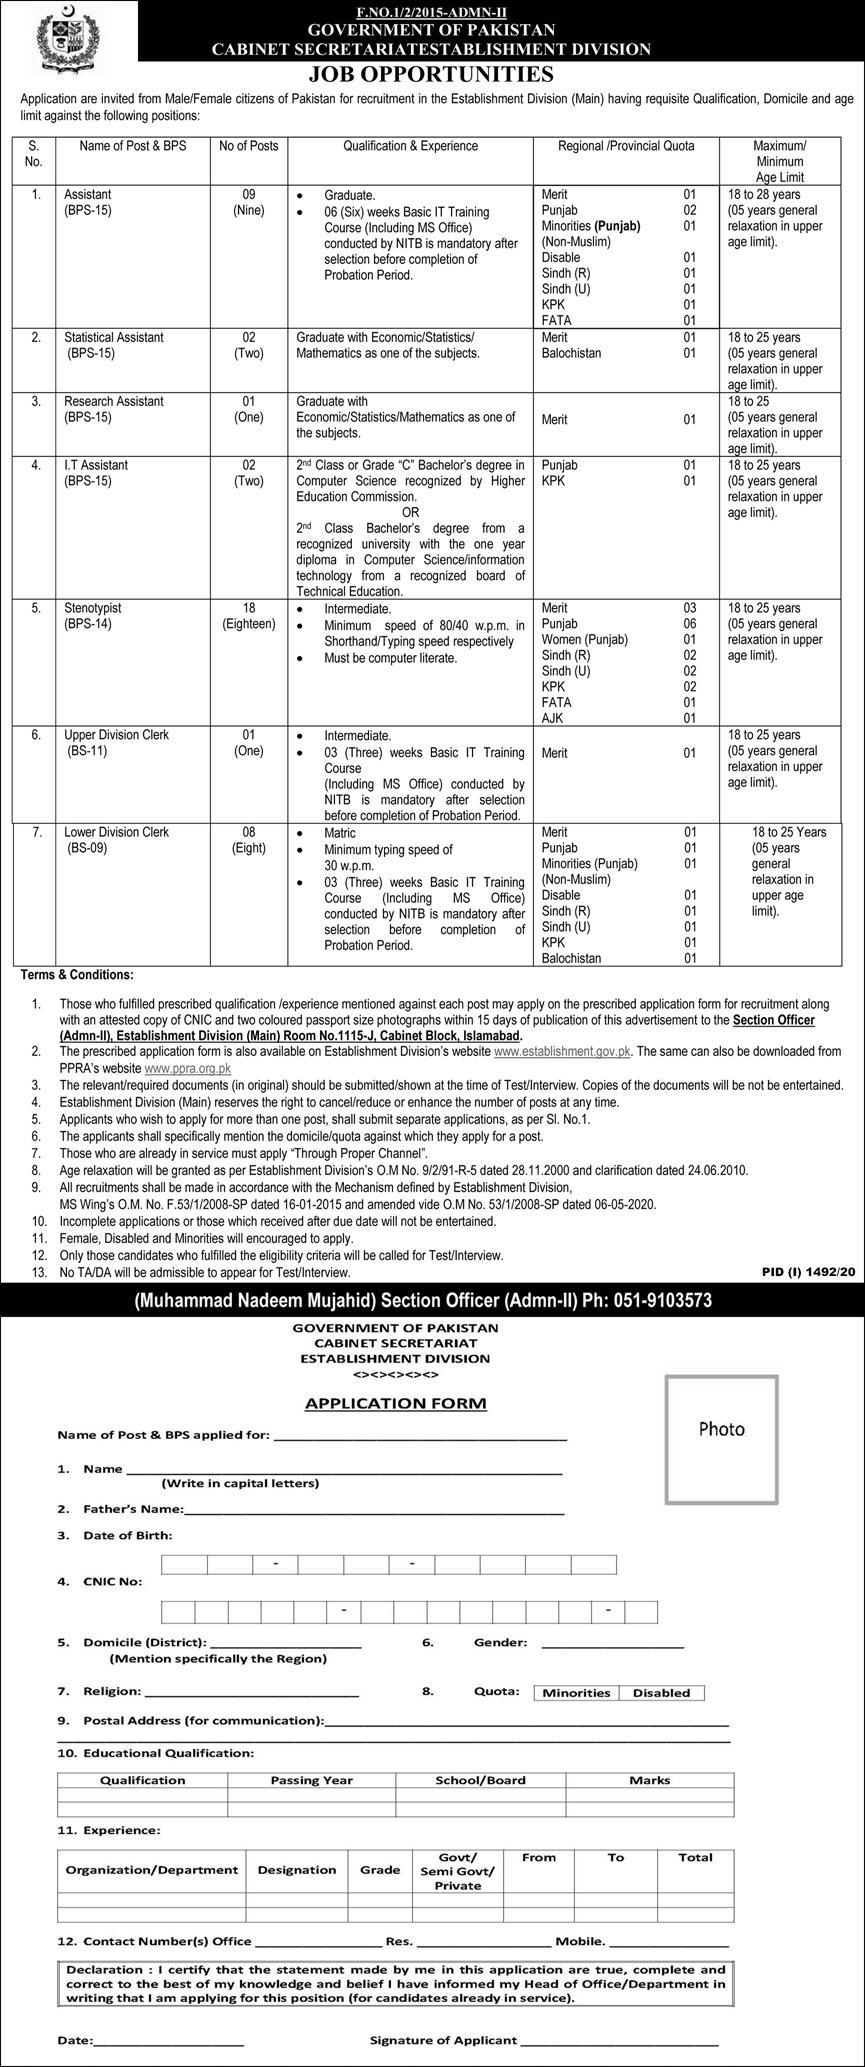 Cabinet Secretariat Establishment Division Jobs 2023 Application Form Advertisement